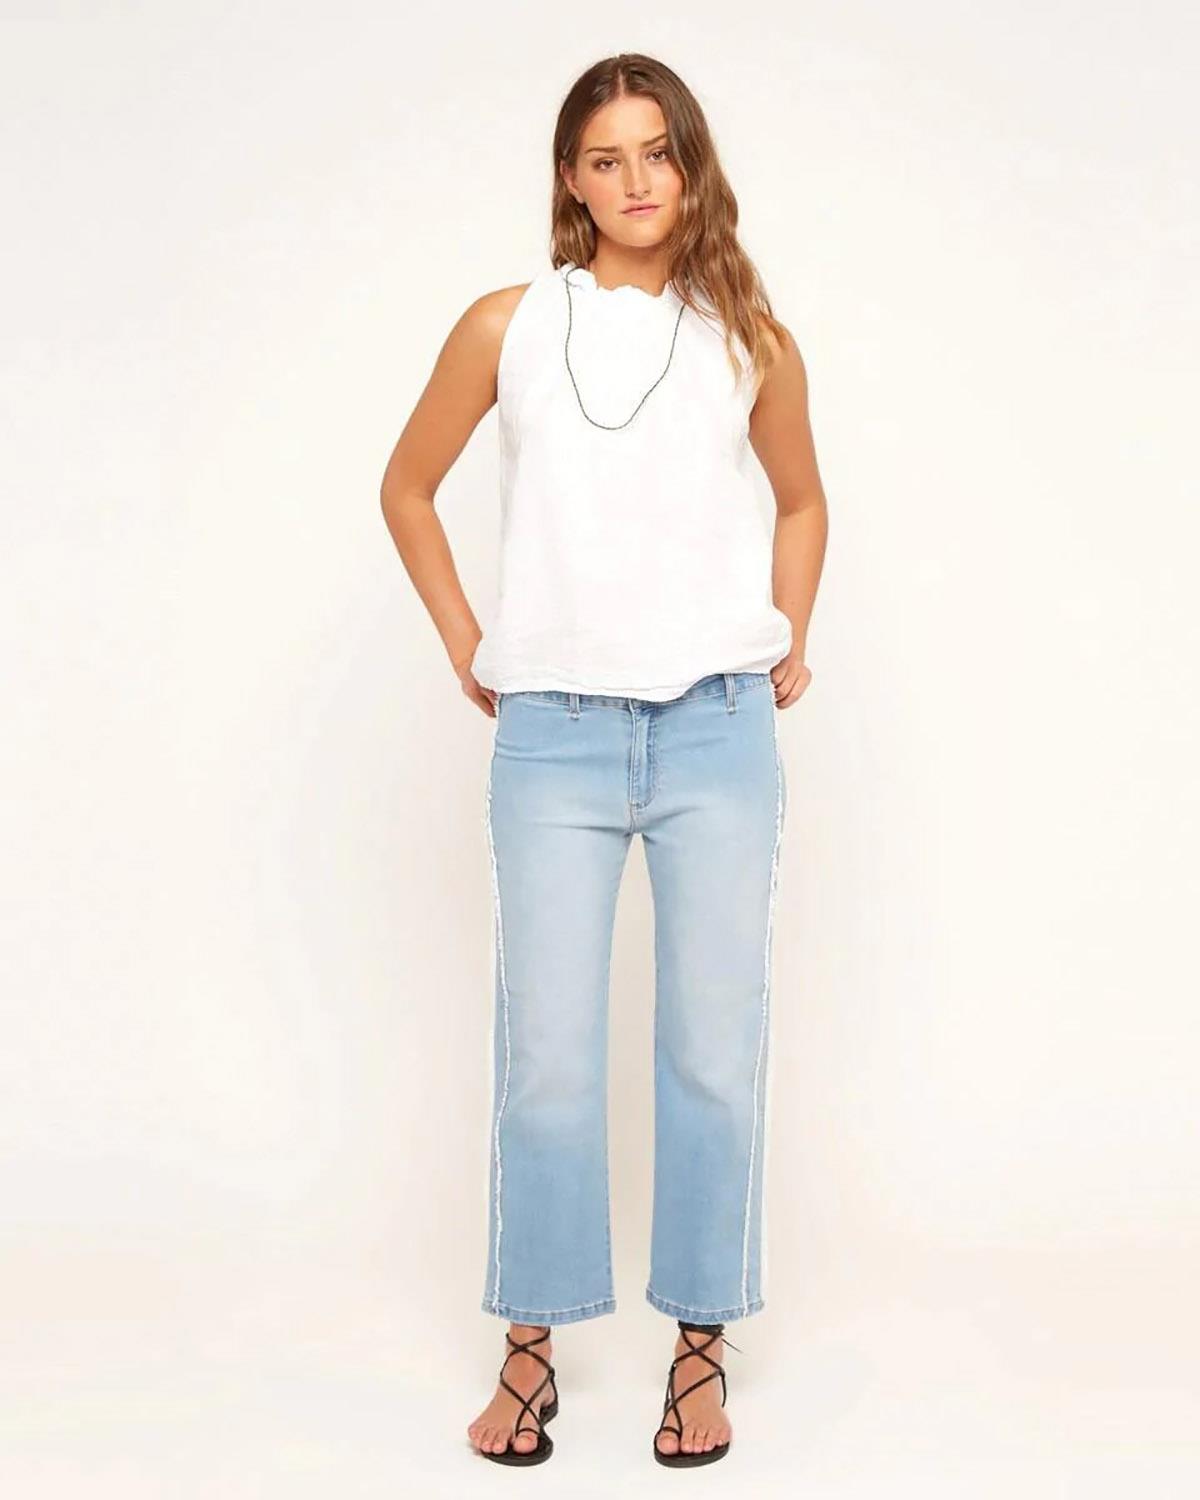 Jeans Renatta 3. Jeans flecos laterales, de Renatta & Go